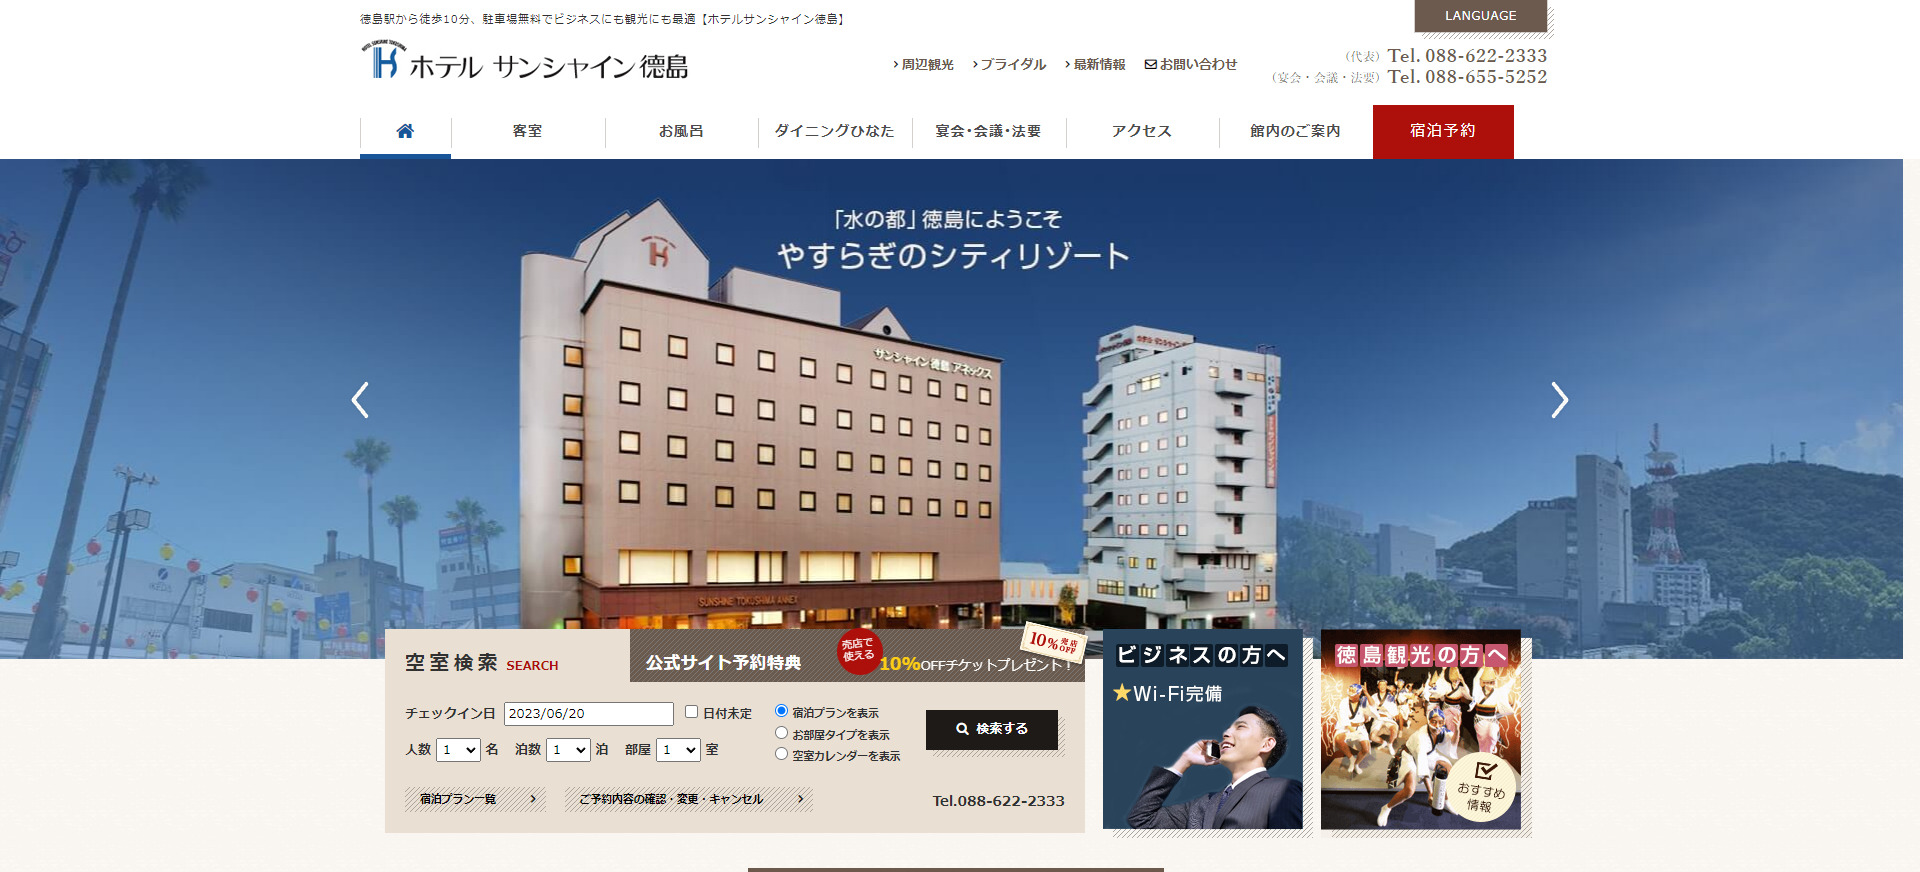 FireShot Capture 021 - 【公式】ホテルサンシャイン徳島 - 本館・アネックス館 - hotel-sunshine.co.jp